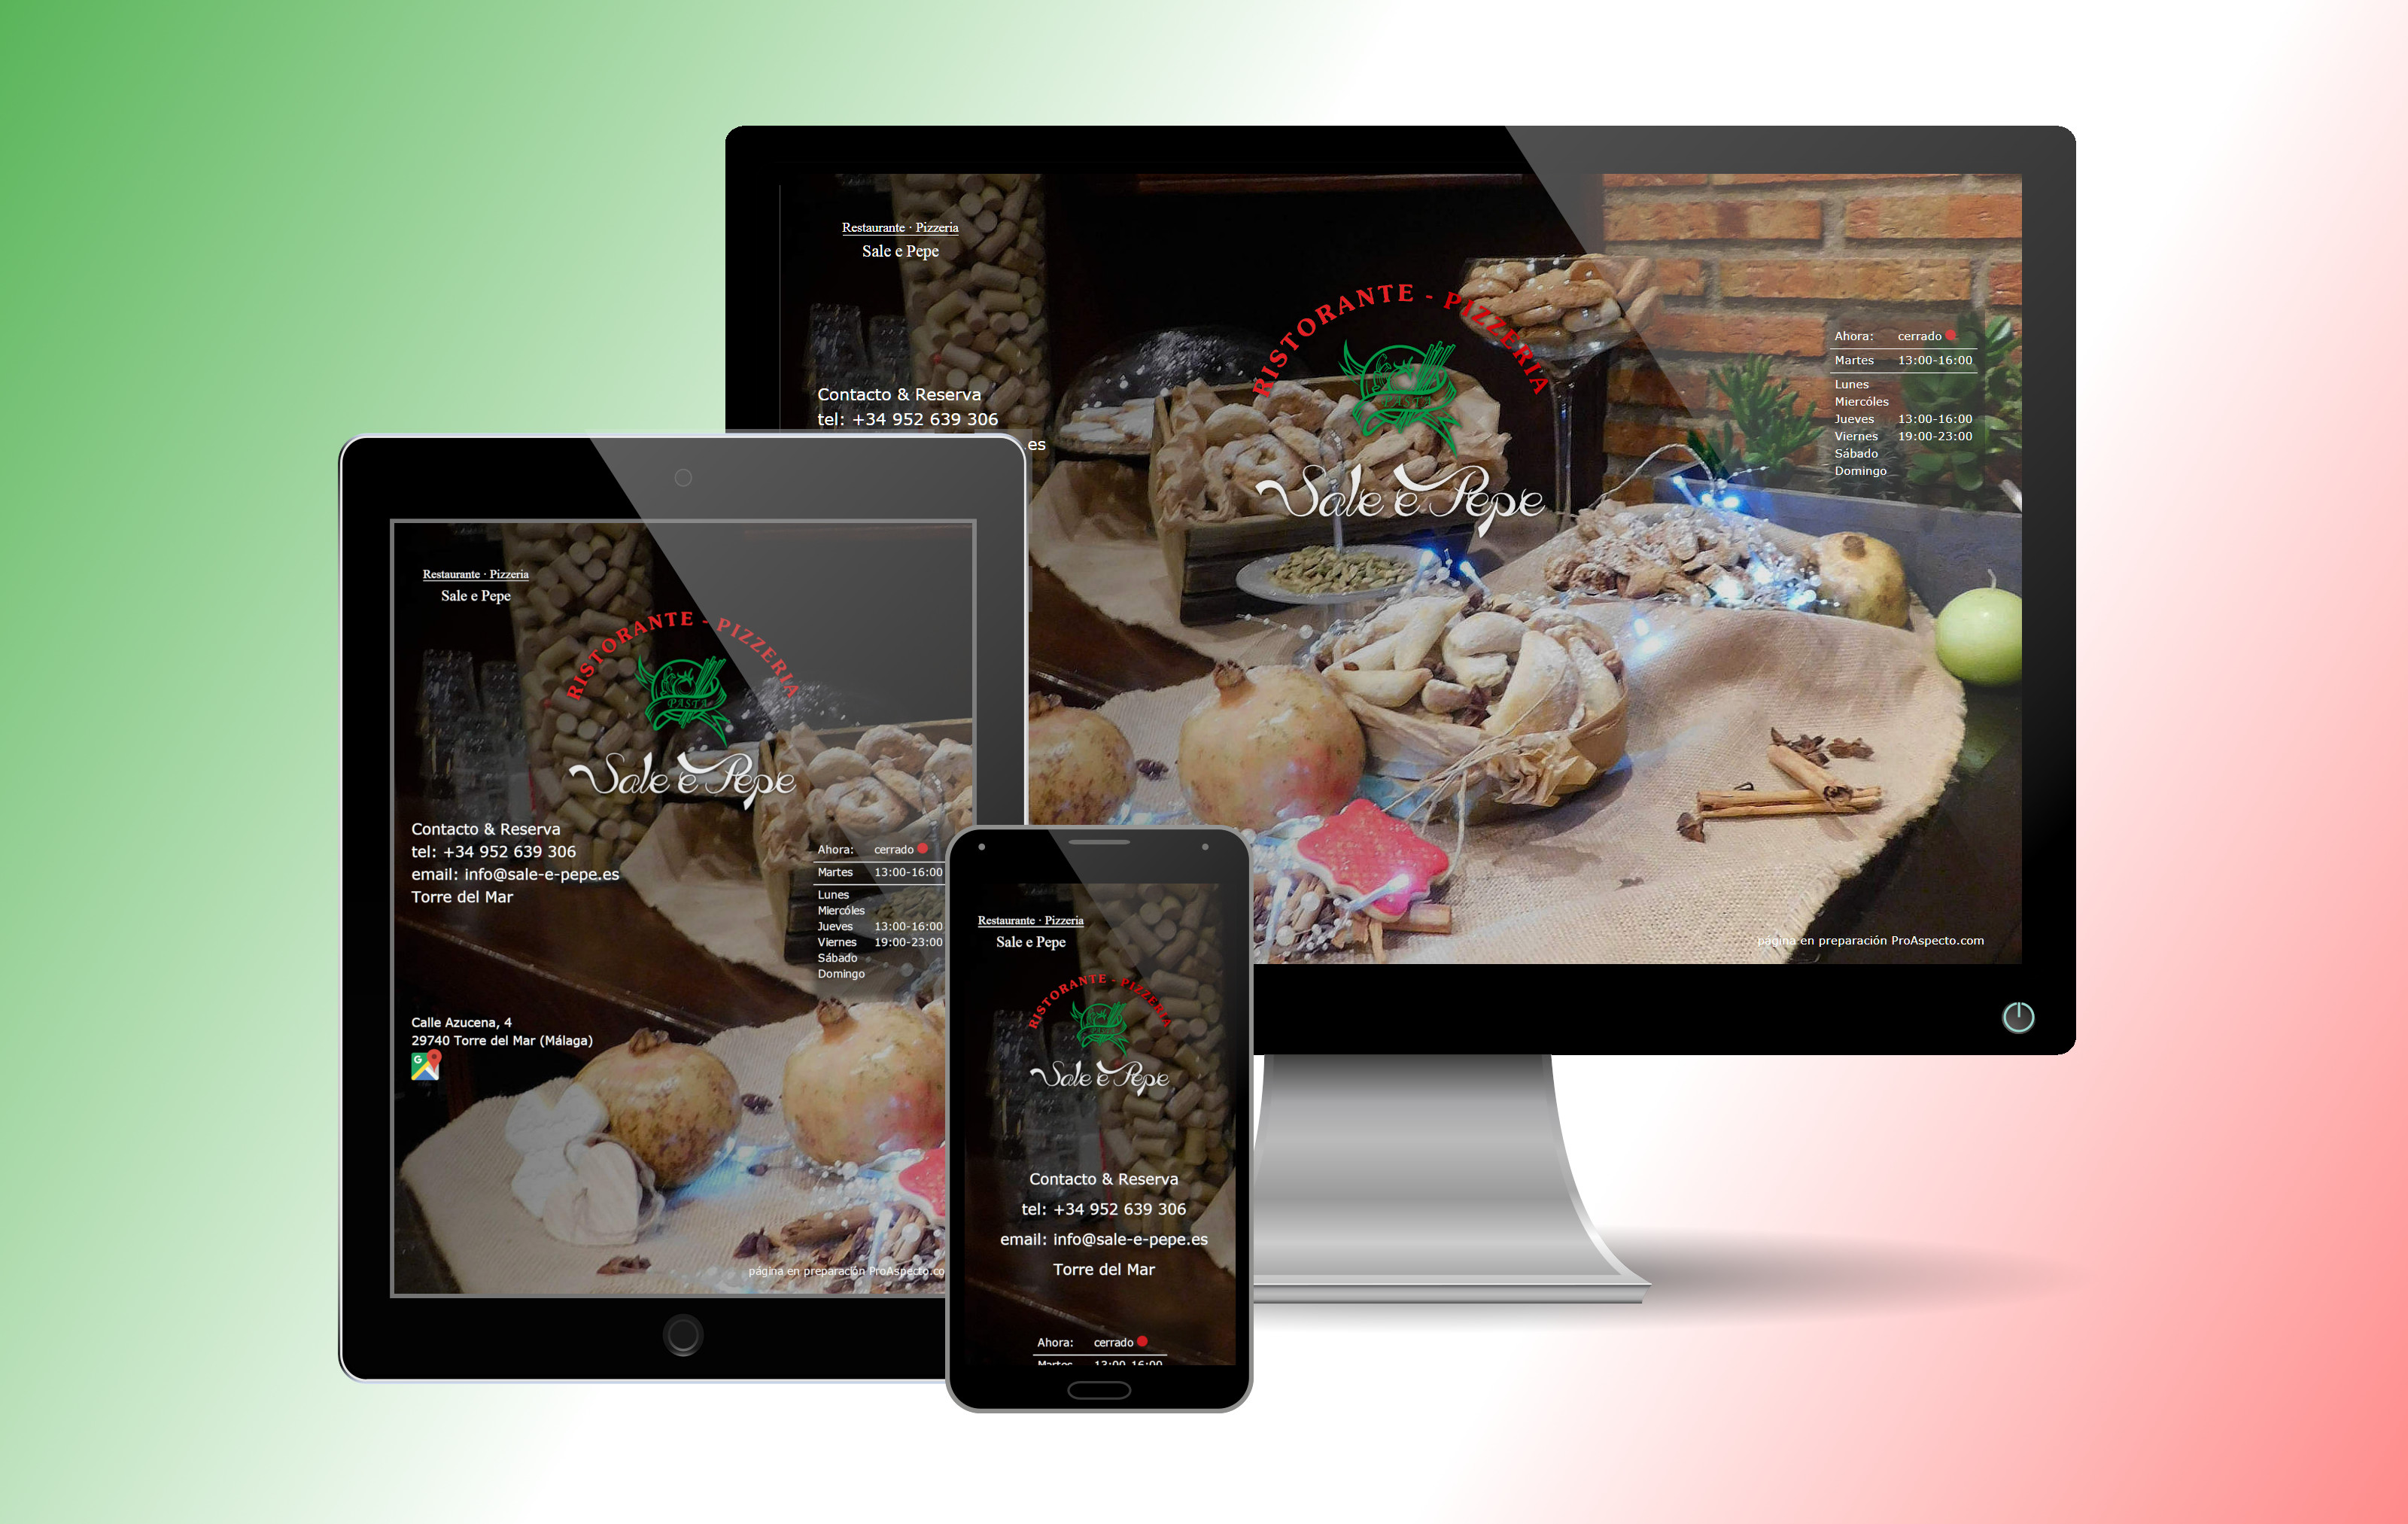 Website Sale e Pepe Italian restaurant in different screenshots